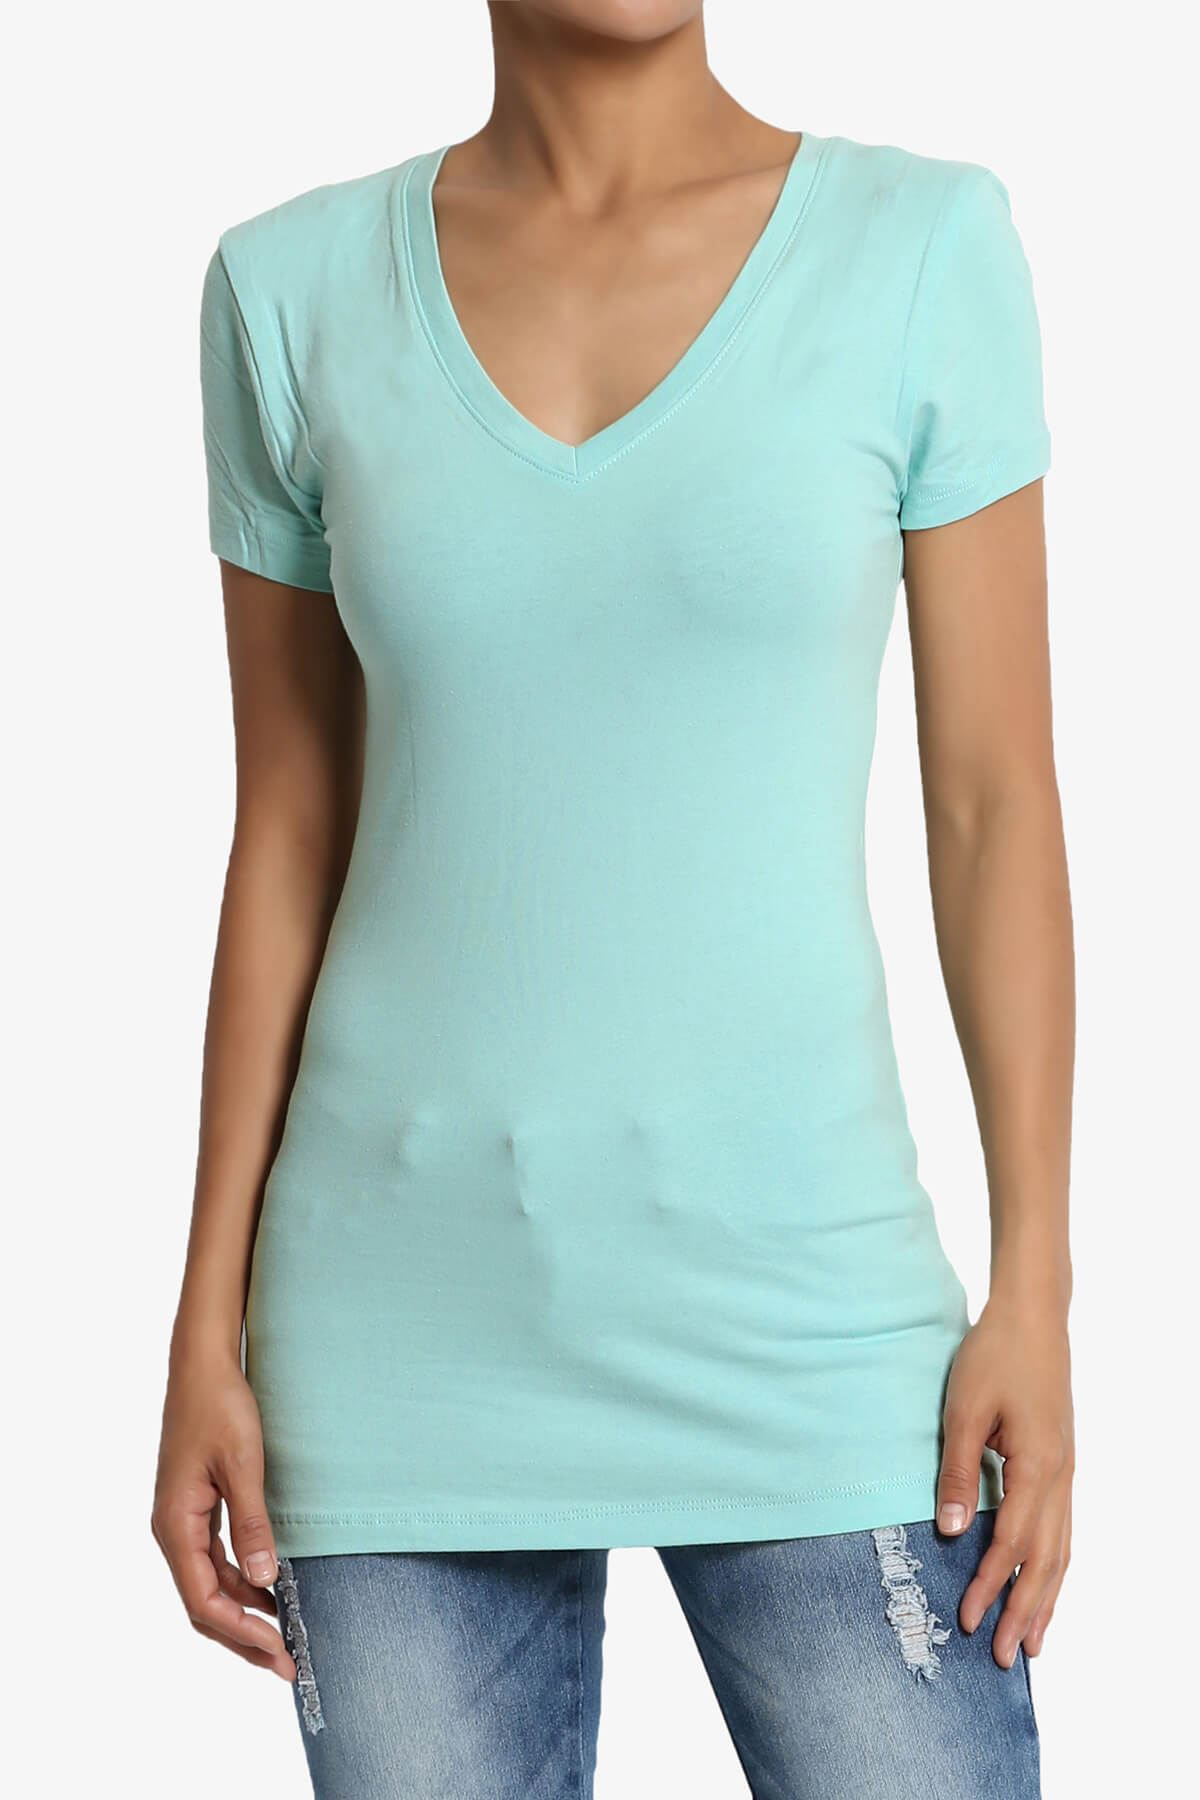 Themogan Basic Plain Short Sleeve V Neck T Shirts Cotton Stretch Long